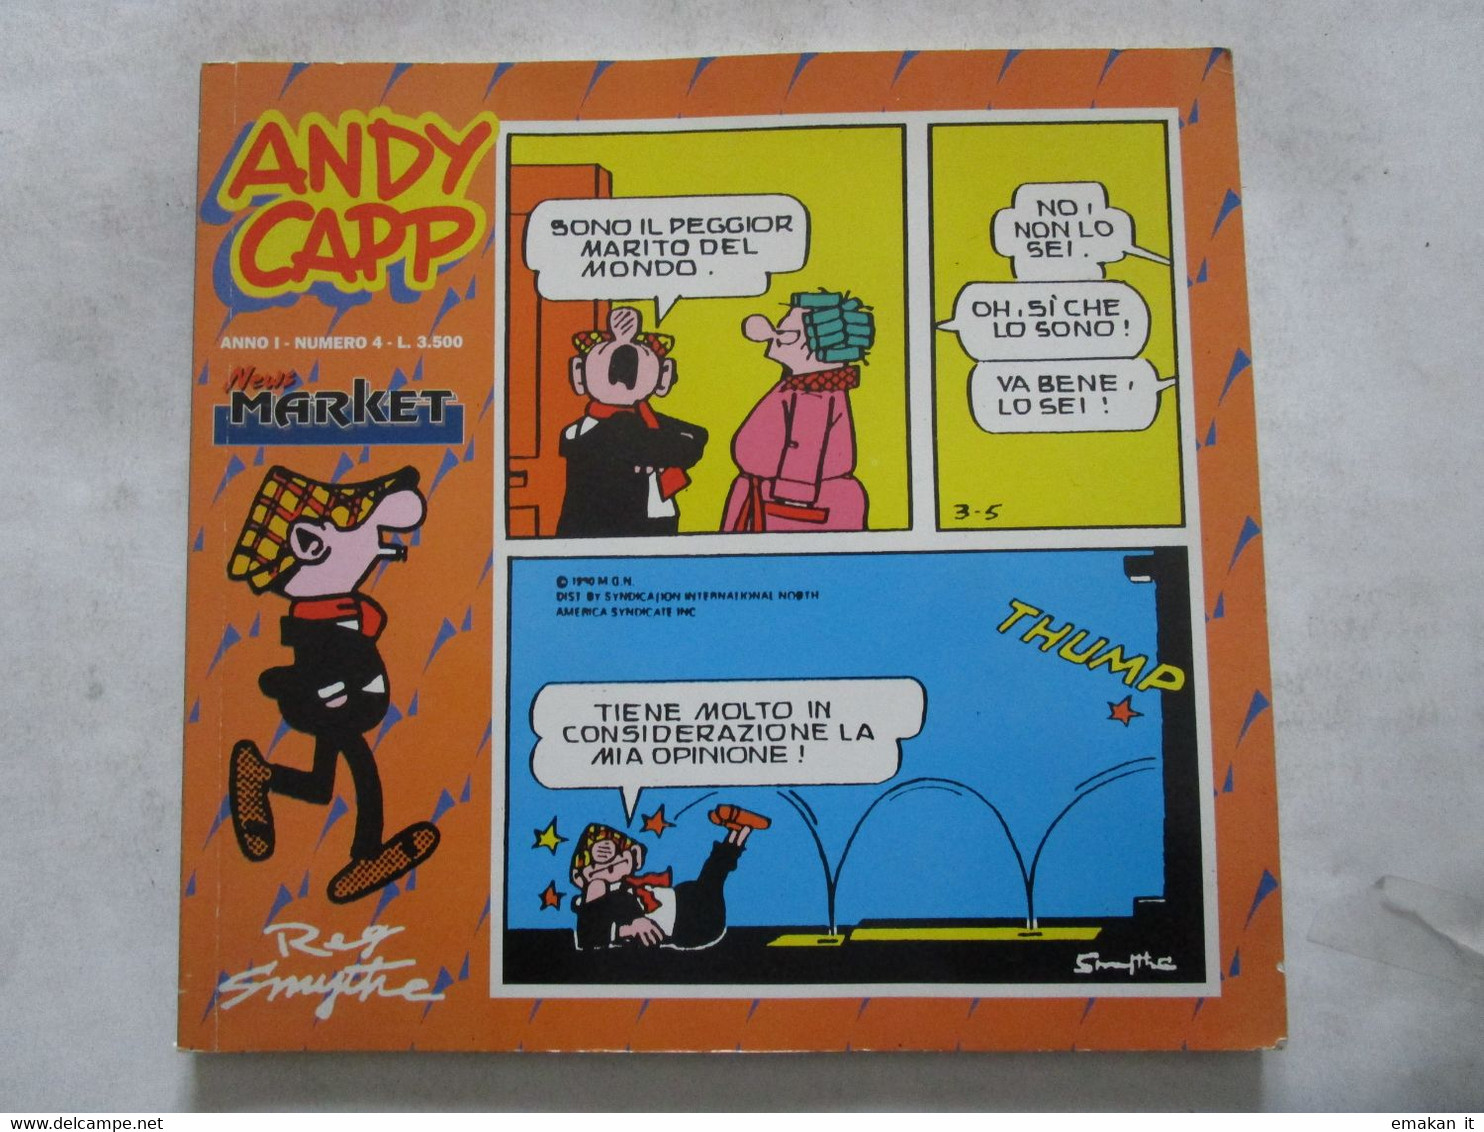 # ANDY CAPP NEW MARKET N 4 / 1993 - Erstauflagen